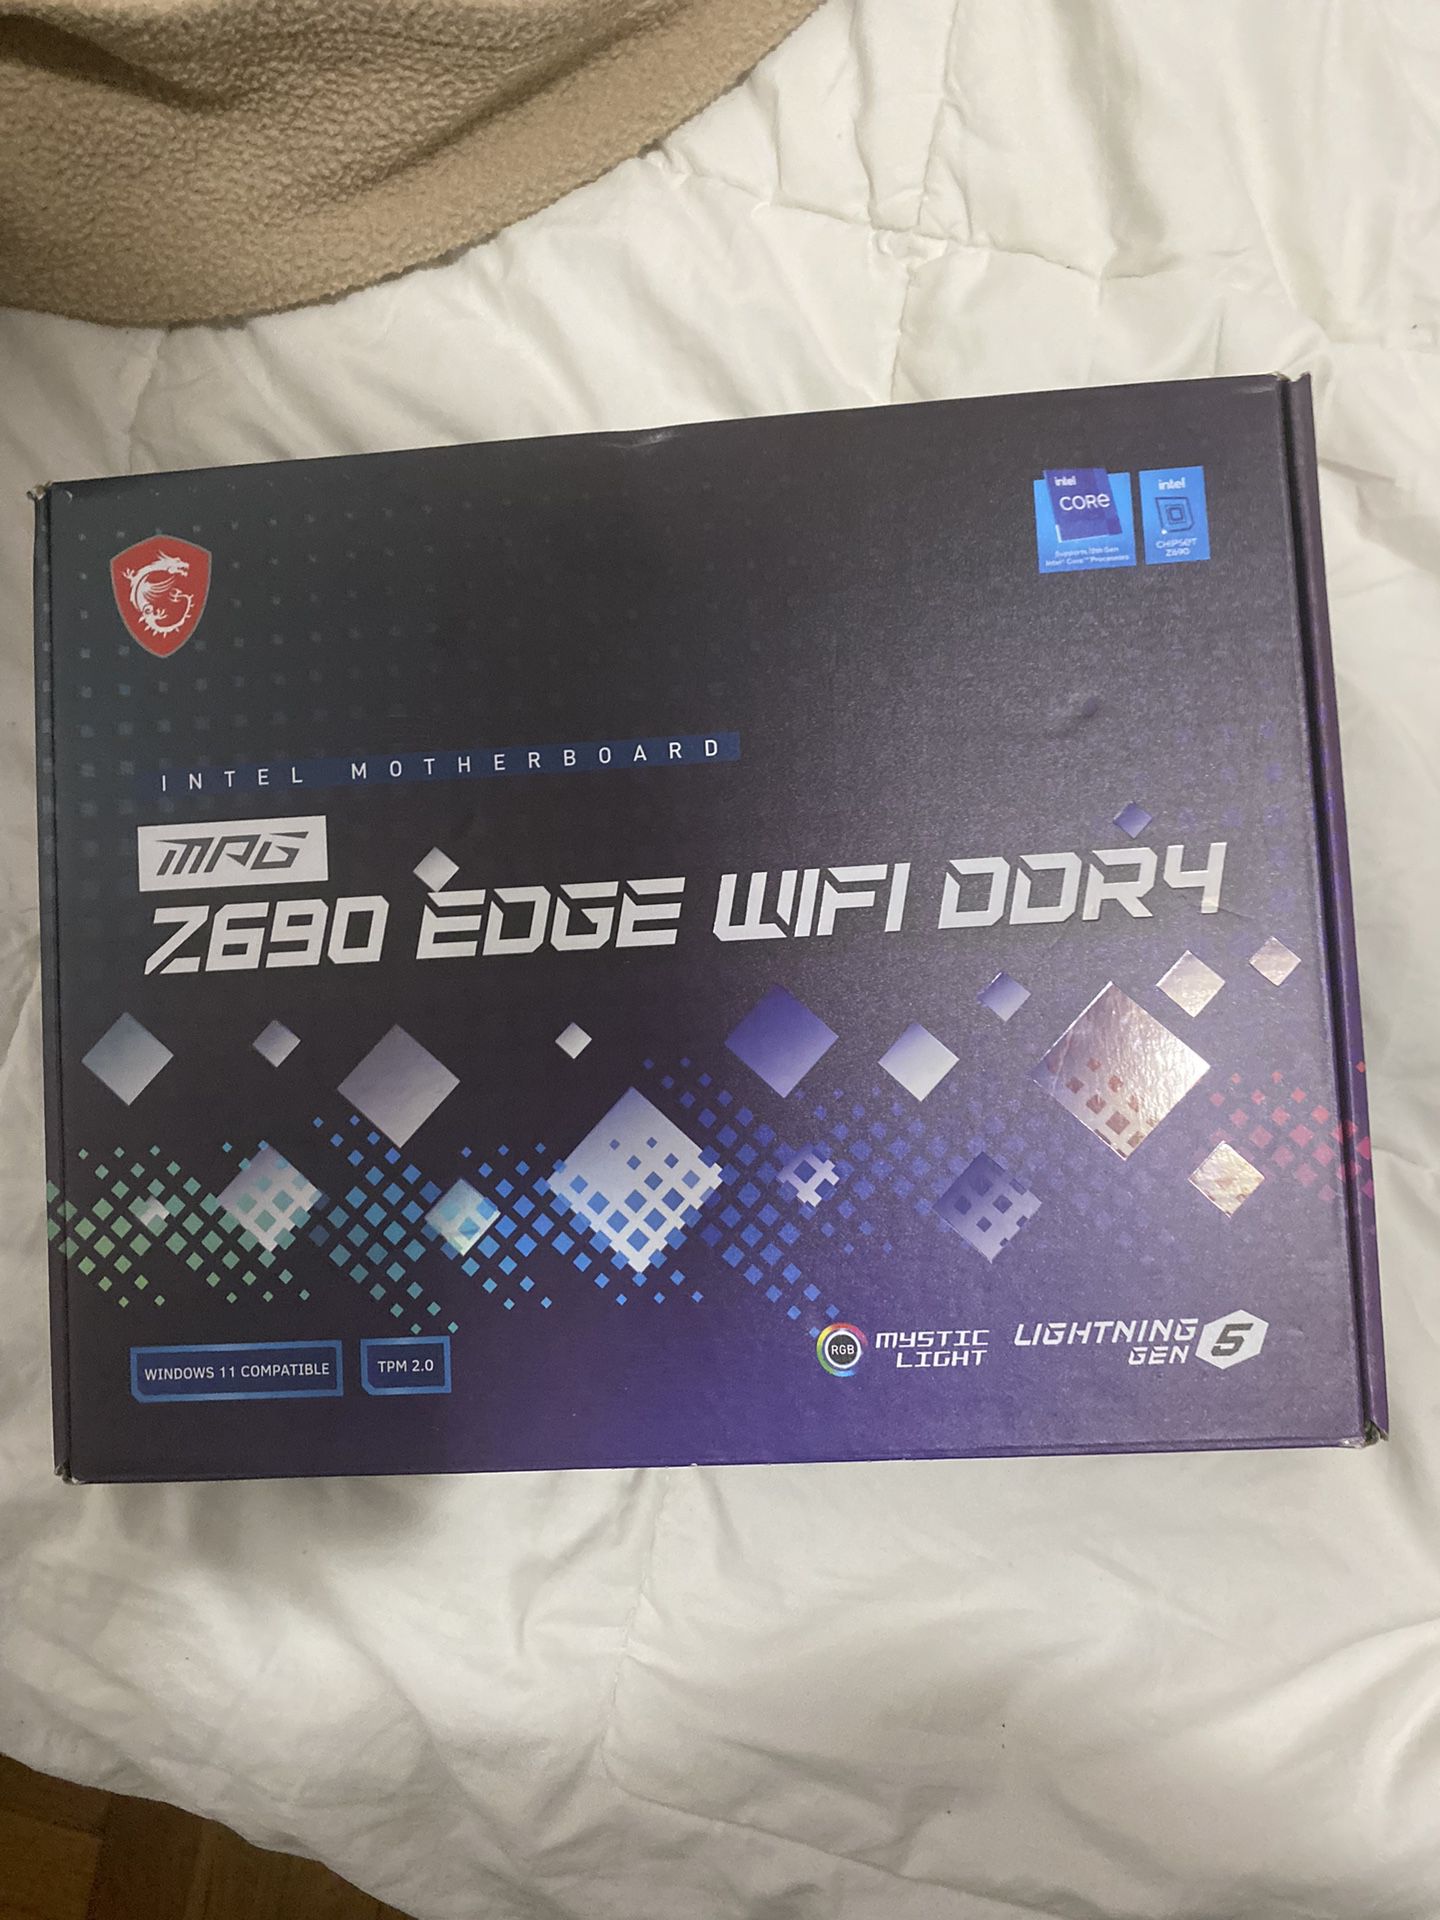 Z690 EDGE Wifi Ddr4